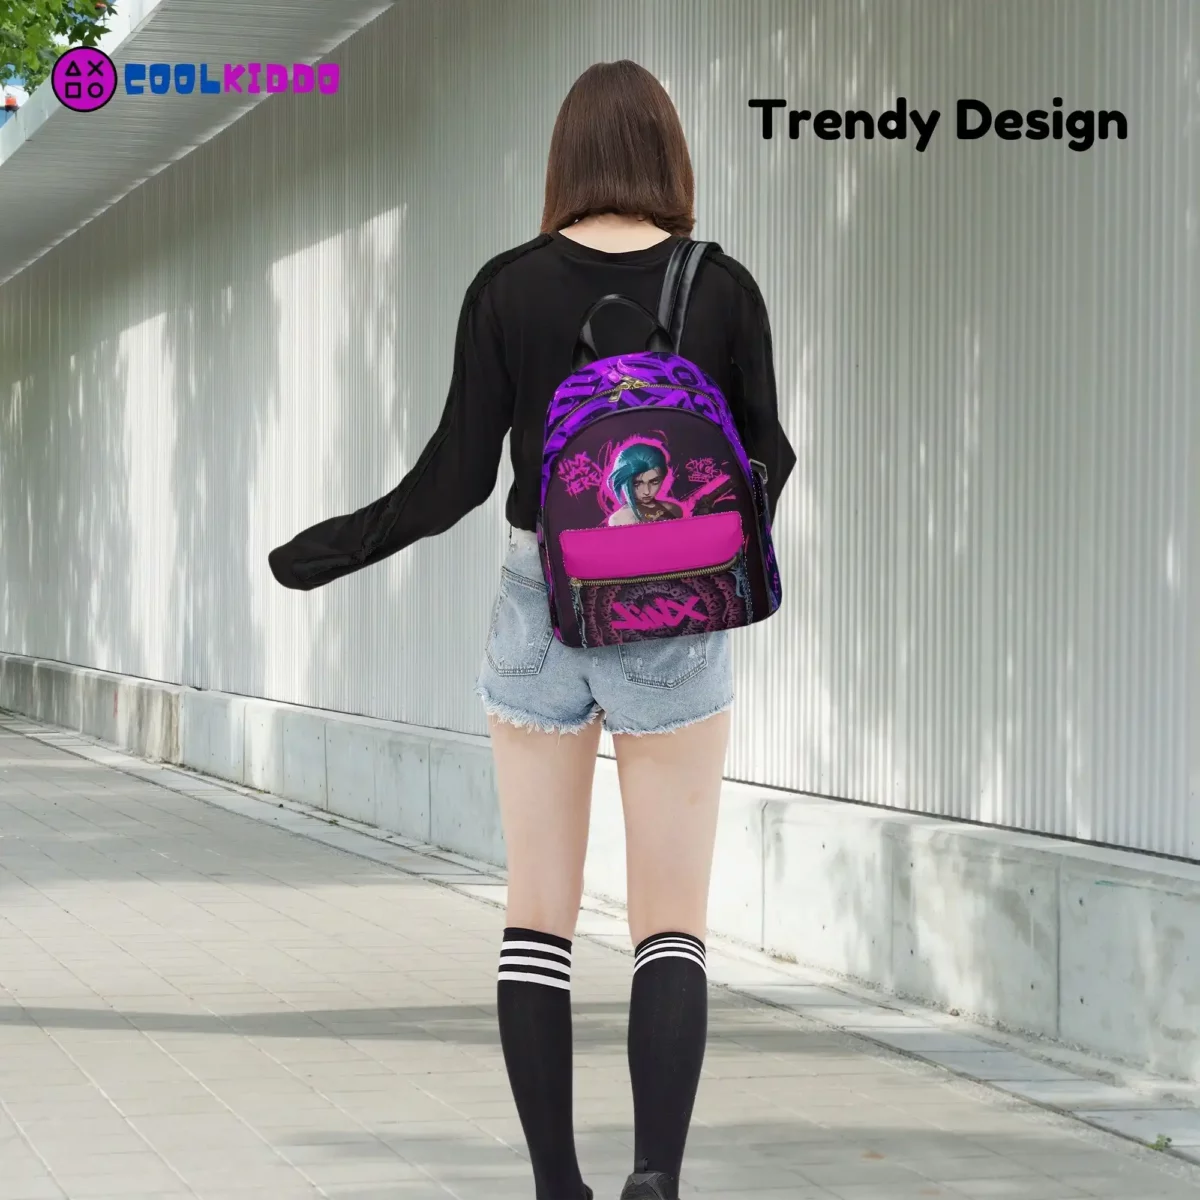 Jinx Character LoL Art Graffiti Style Mini Leather Backpack for Girls/Youth Cool Kiddo 18